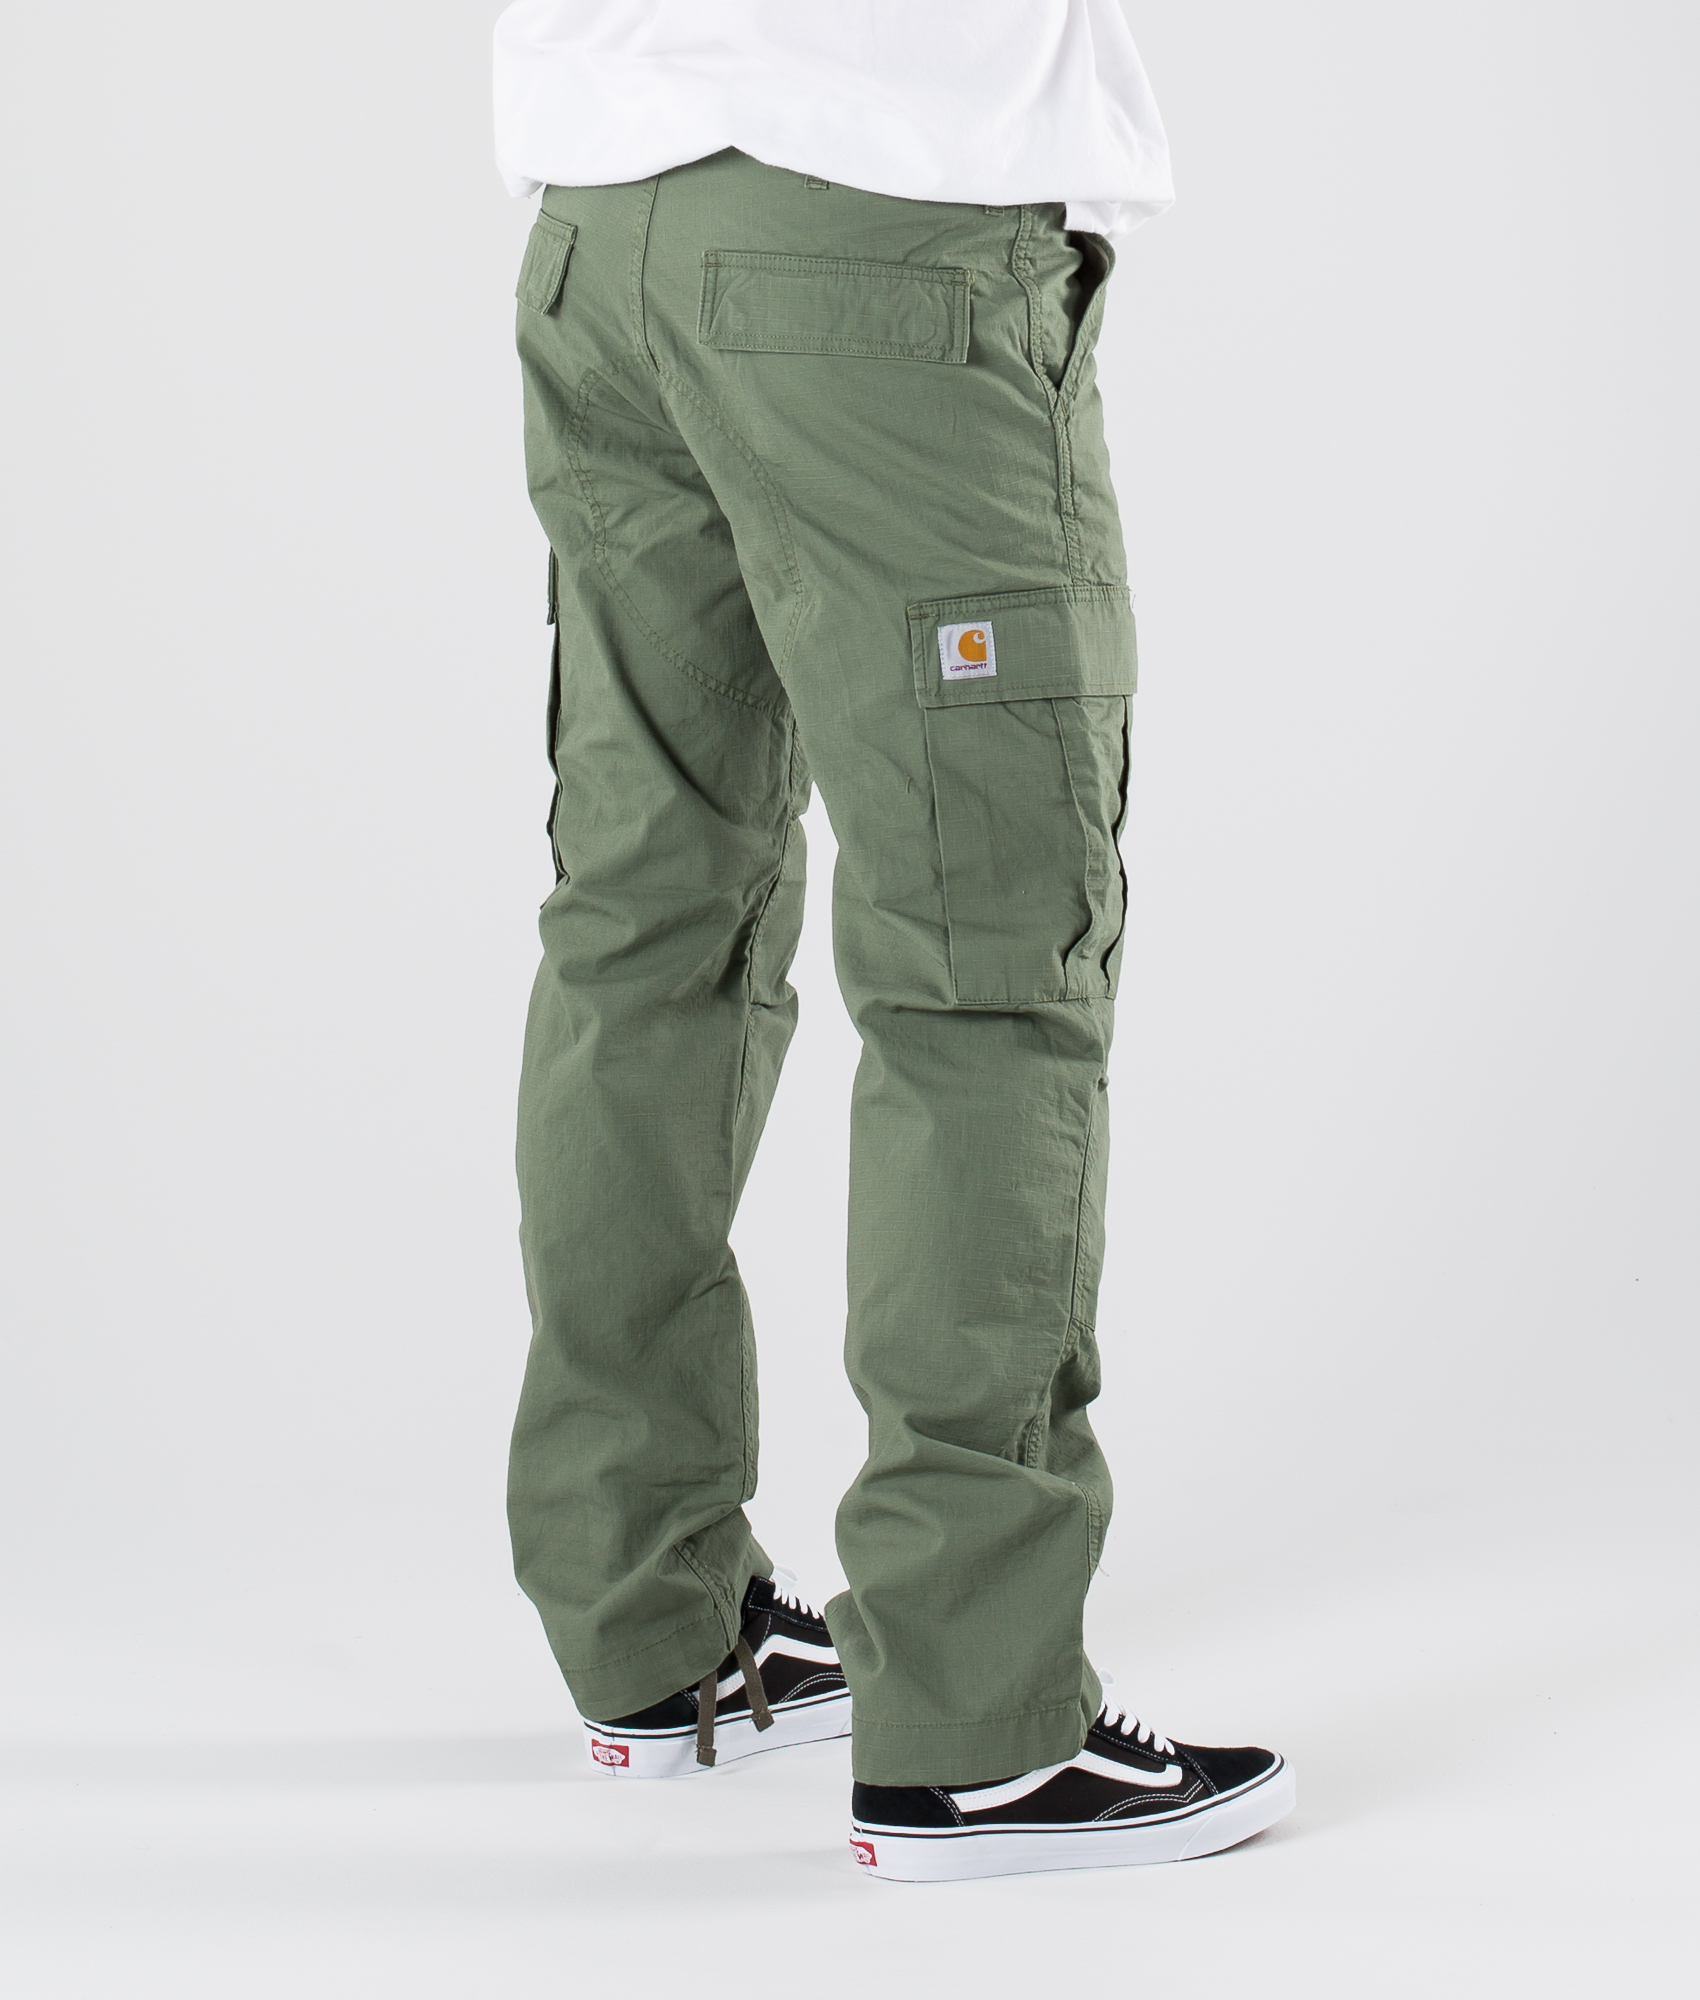 carhartt green cargo pants